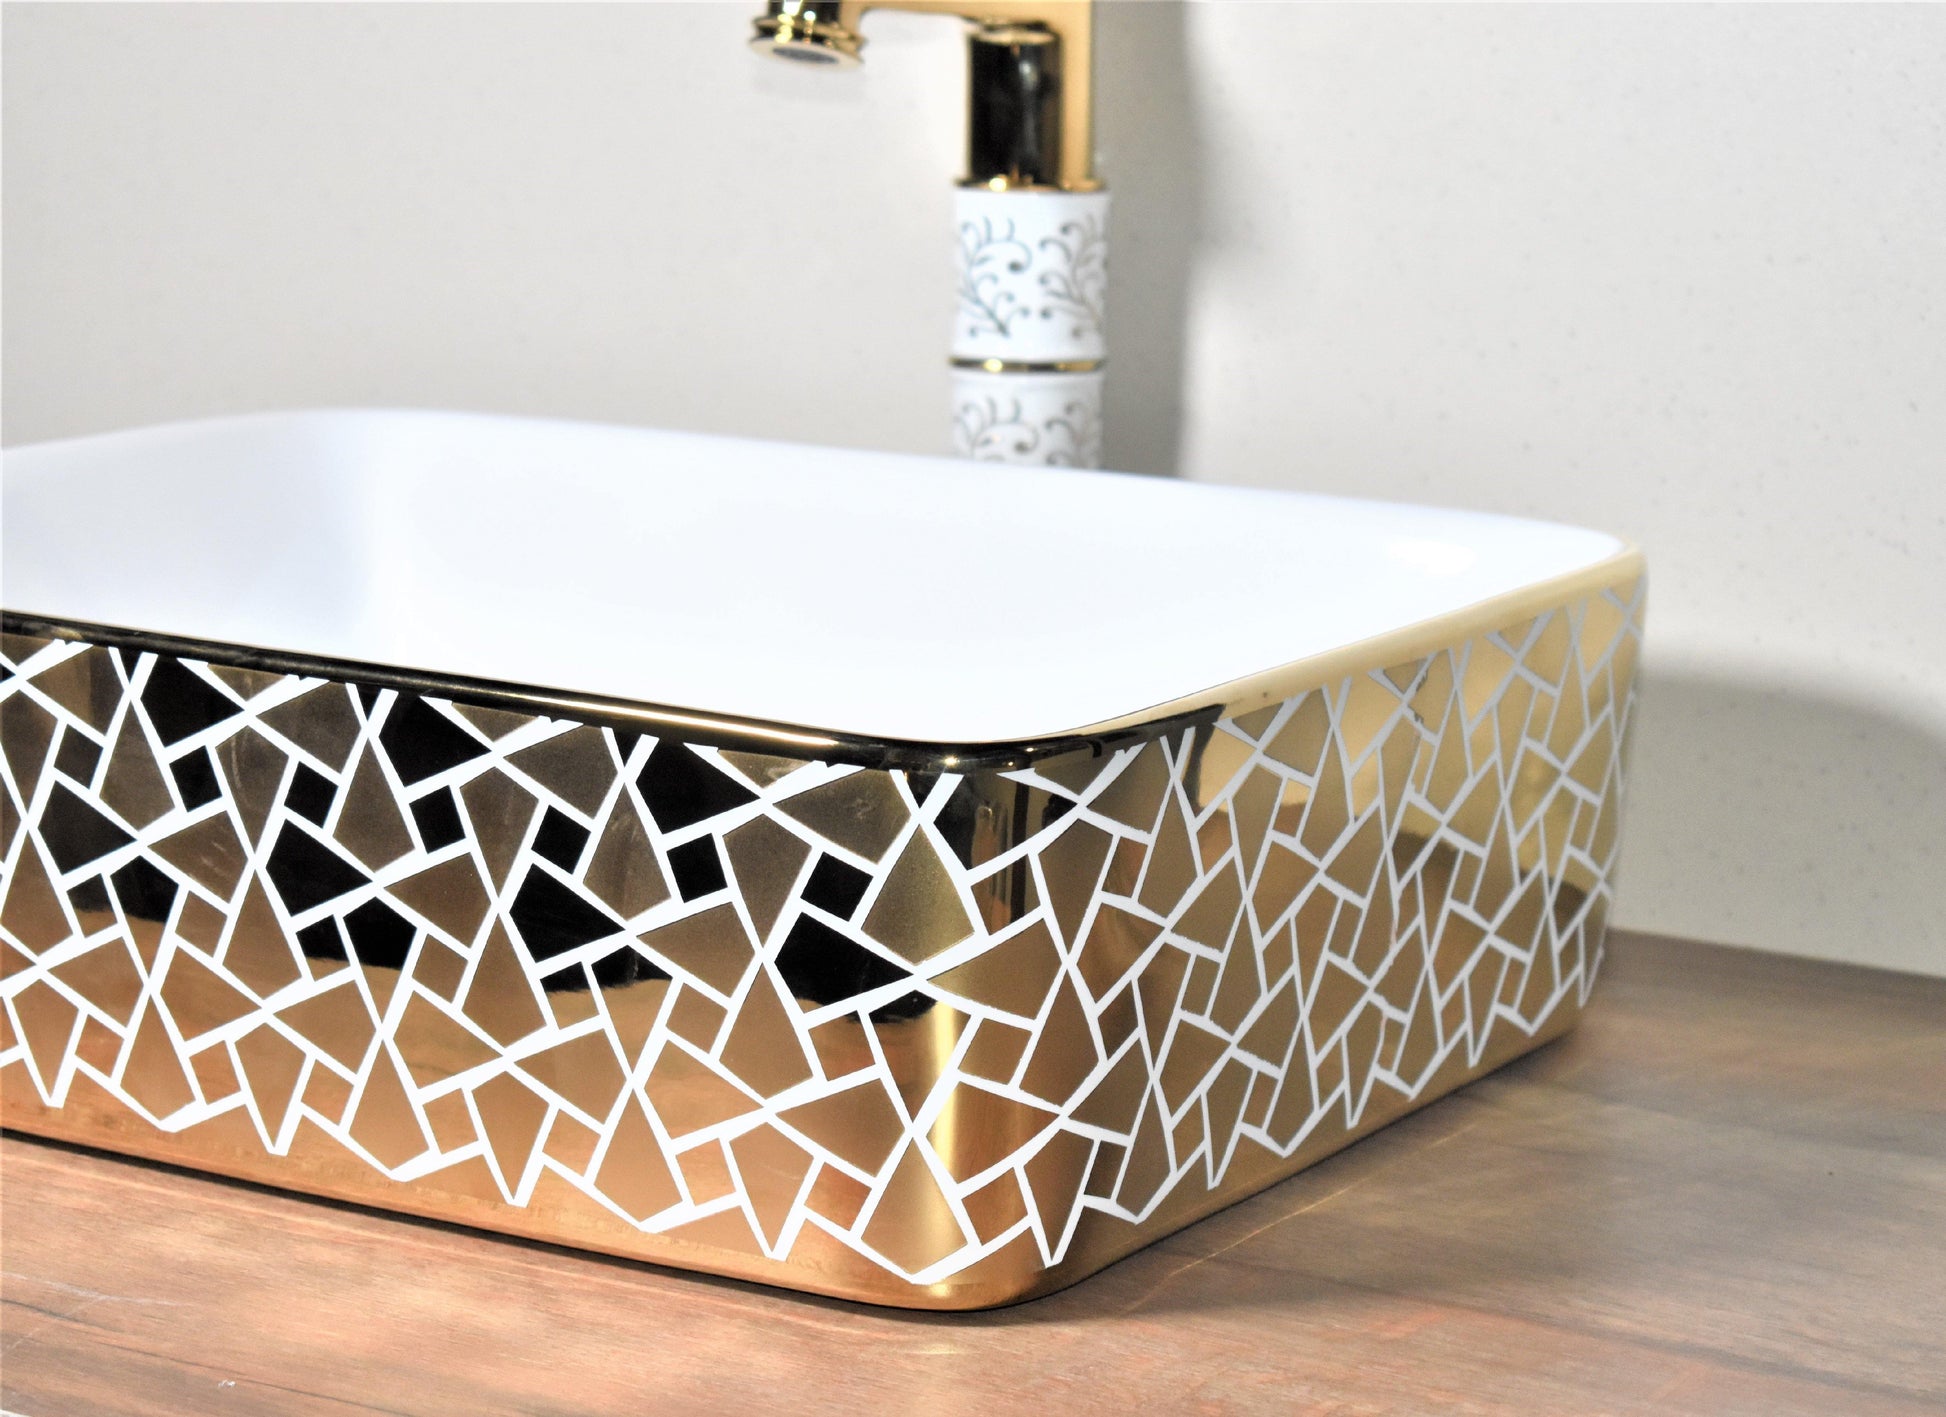 Ceramic Premium Designer Table Top Over Counter Vessel Sink Wash Basin for Bathroom 19 X 15 X 5.5 Inch Gold White Basin For Bathroom - Bath Outlet